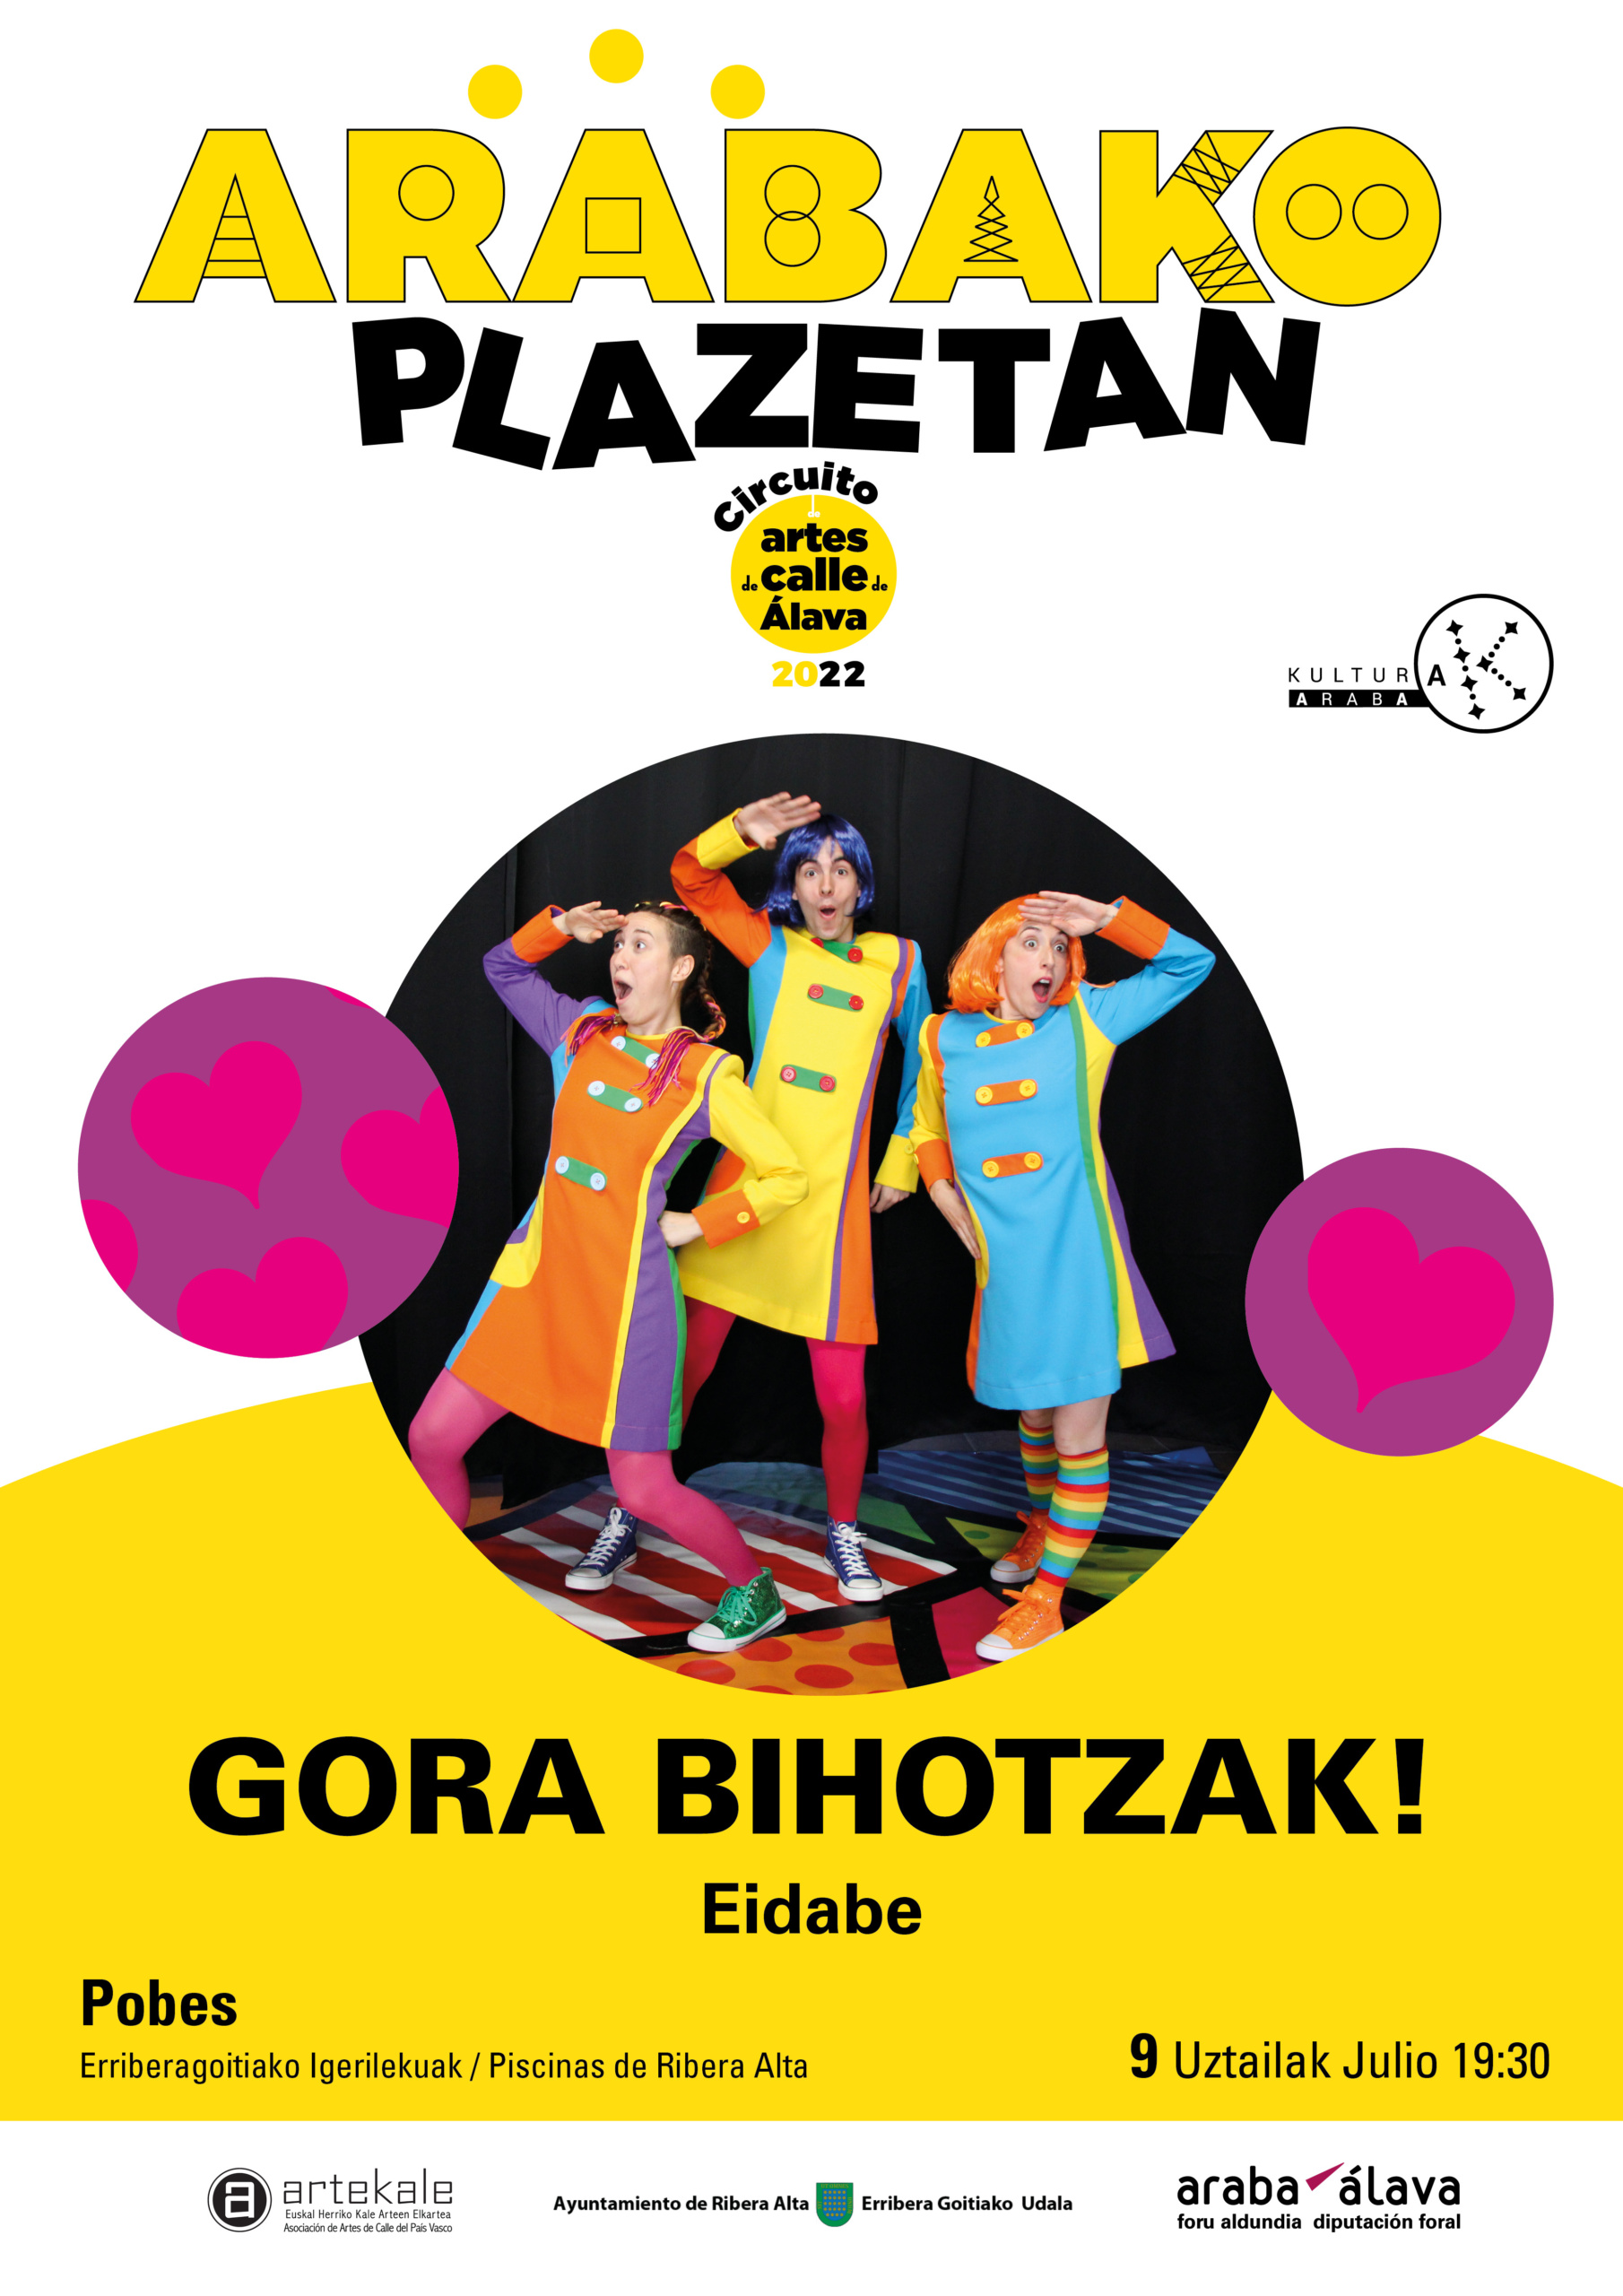 Arabako Plazetan, la compañía EIDABE presentan su obra Gora Bihotzak!  en Pobes. 9 de Julio en la zona de las piscinas.